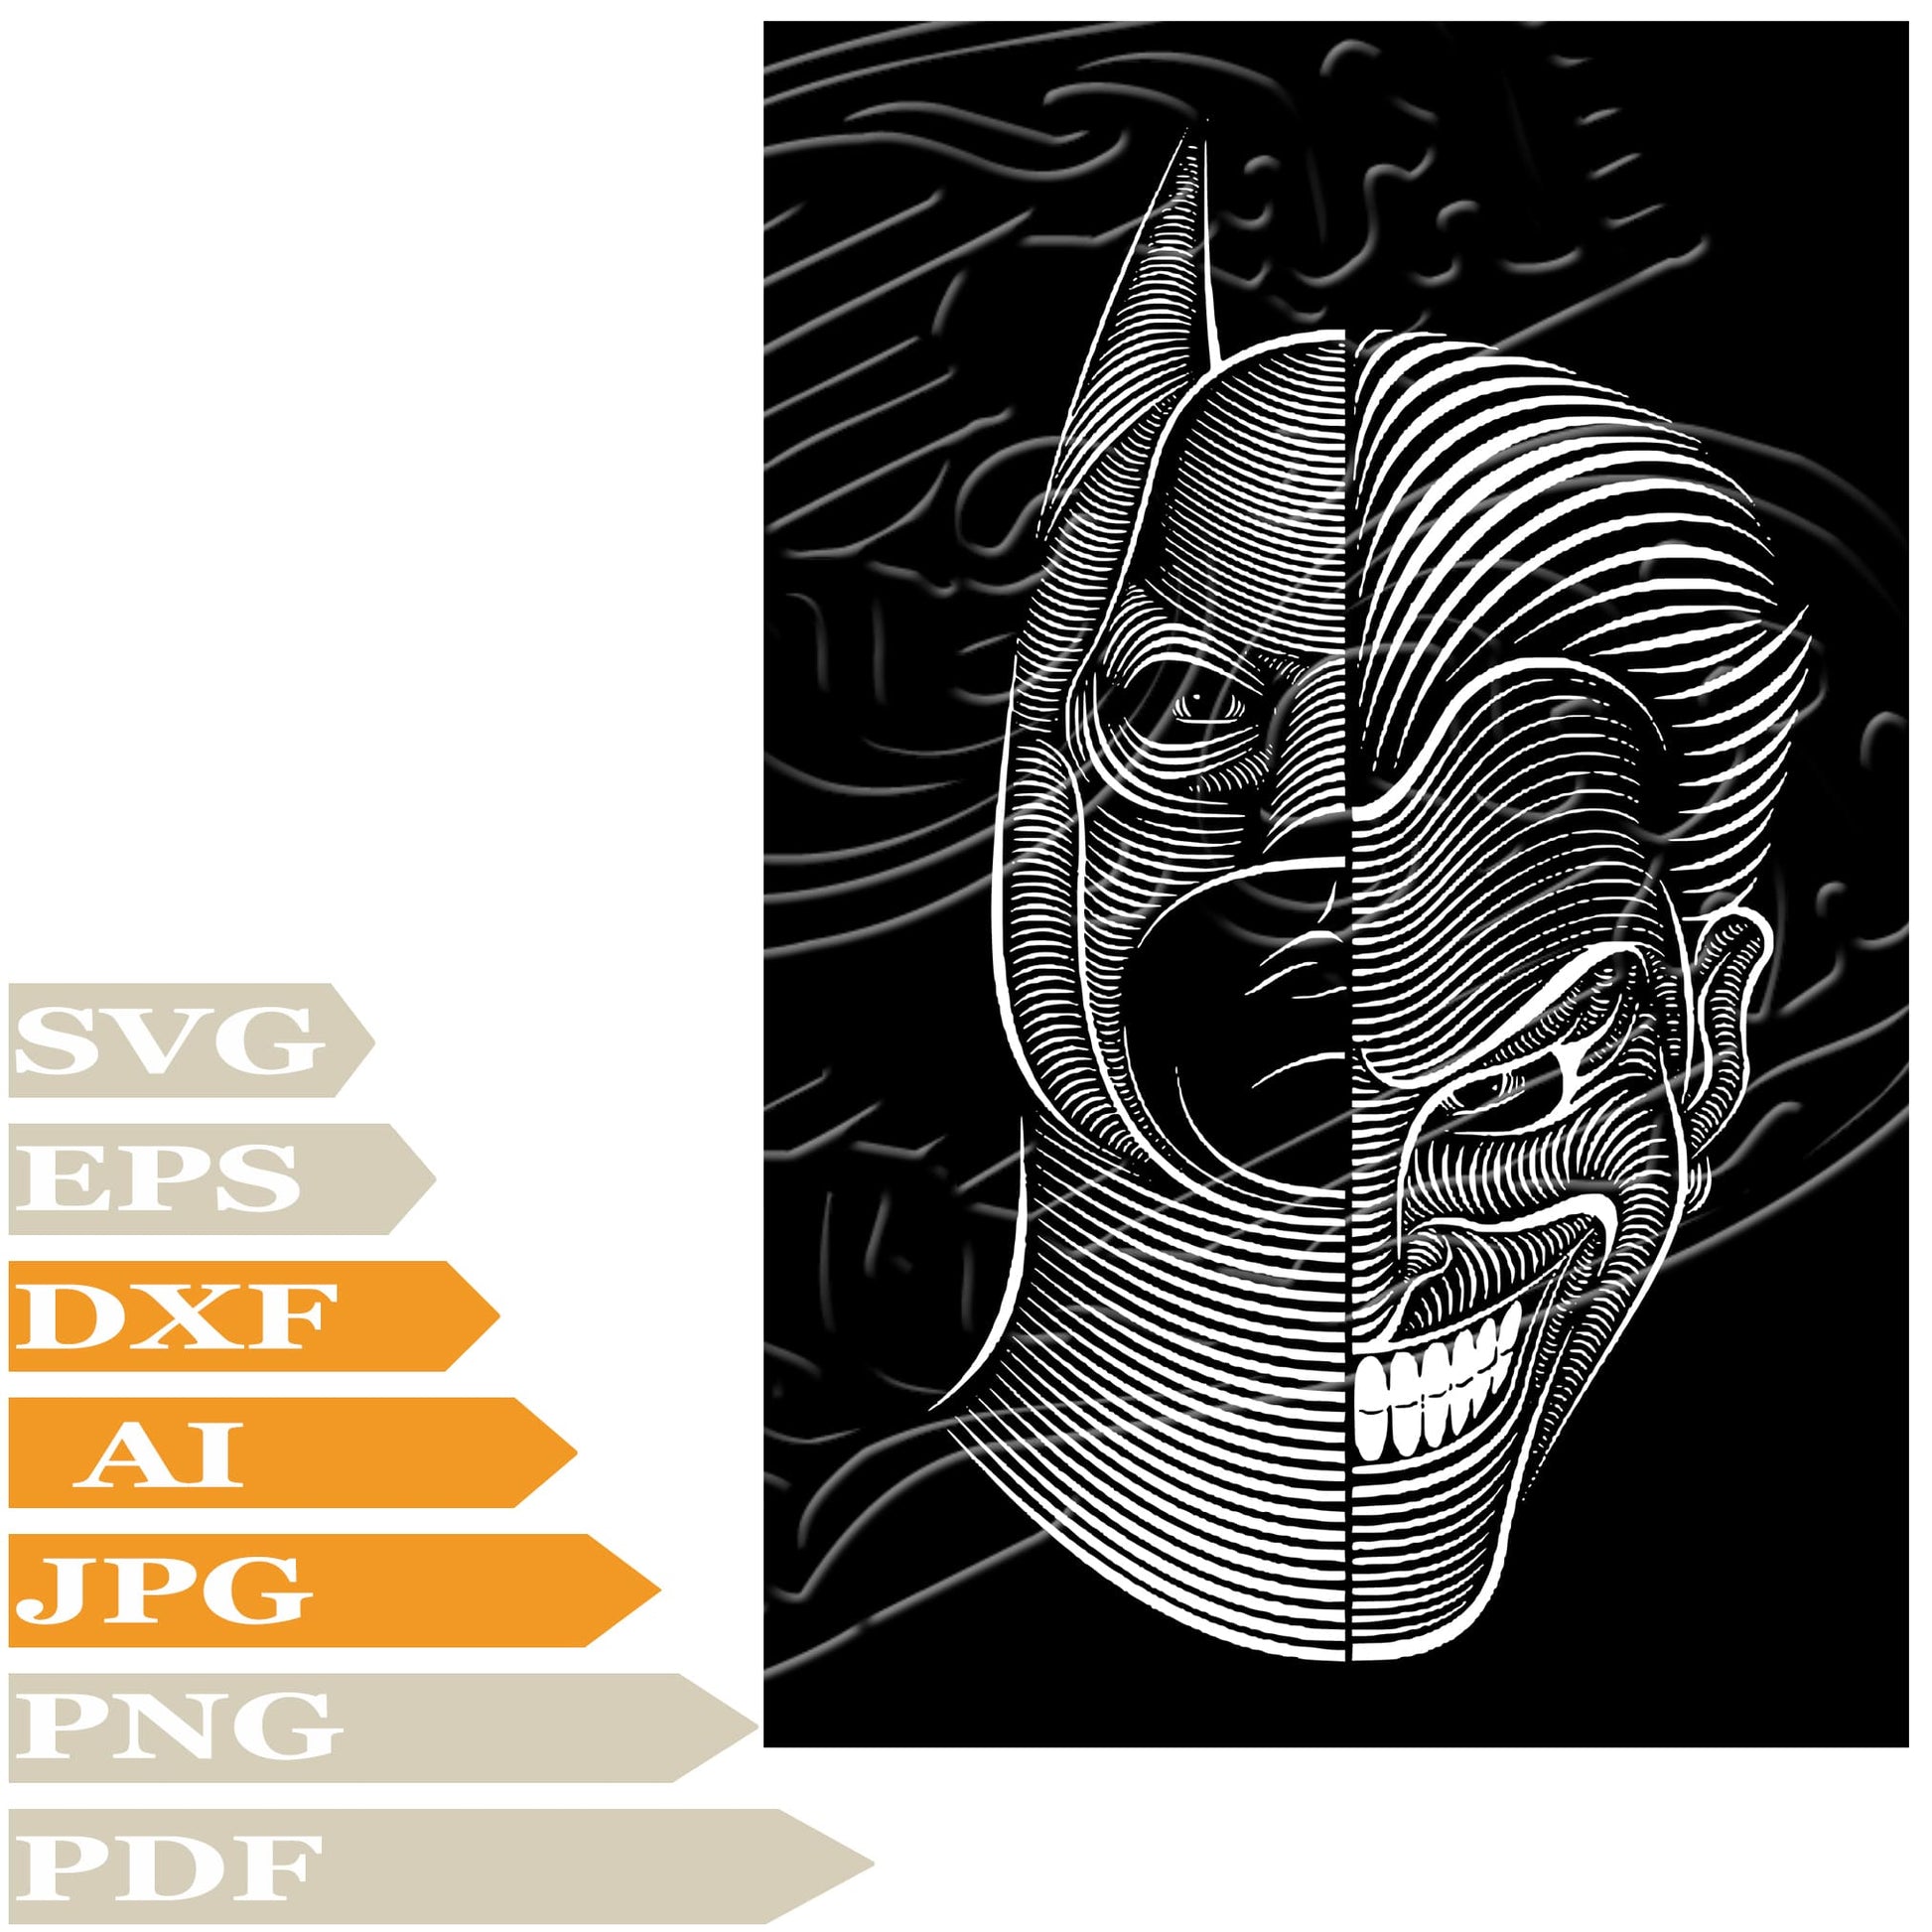 Batman Joker, Batman Joker Face Svg File, Image Cut, Png, For Tattoo, Silhouette, Digital Vector Download, Cut File, Clipart, For Cricut